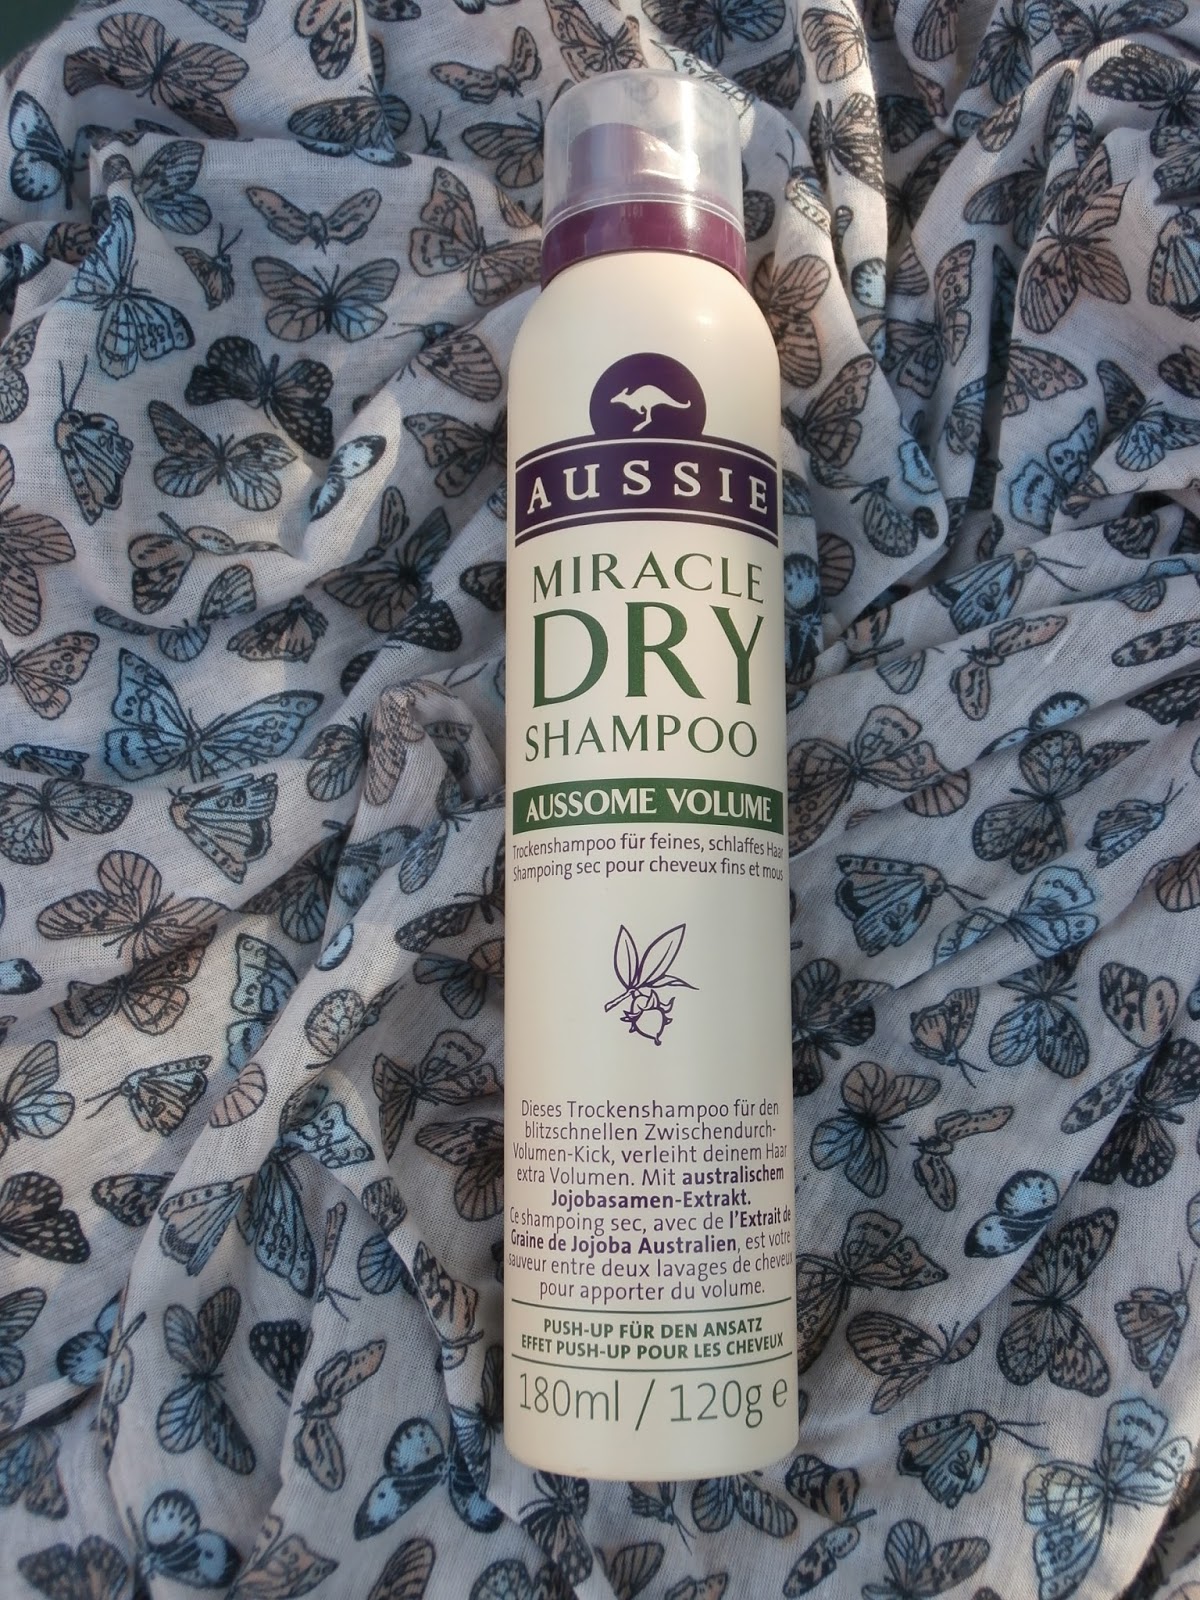 Aussie Miracle Dry Shampoo Aussome Volume Teszt Velemeny